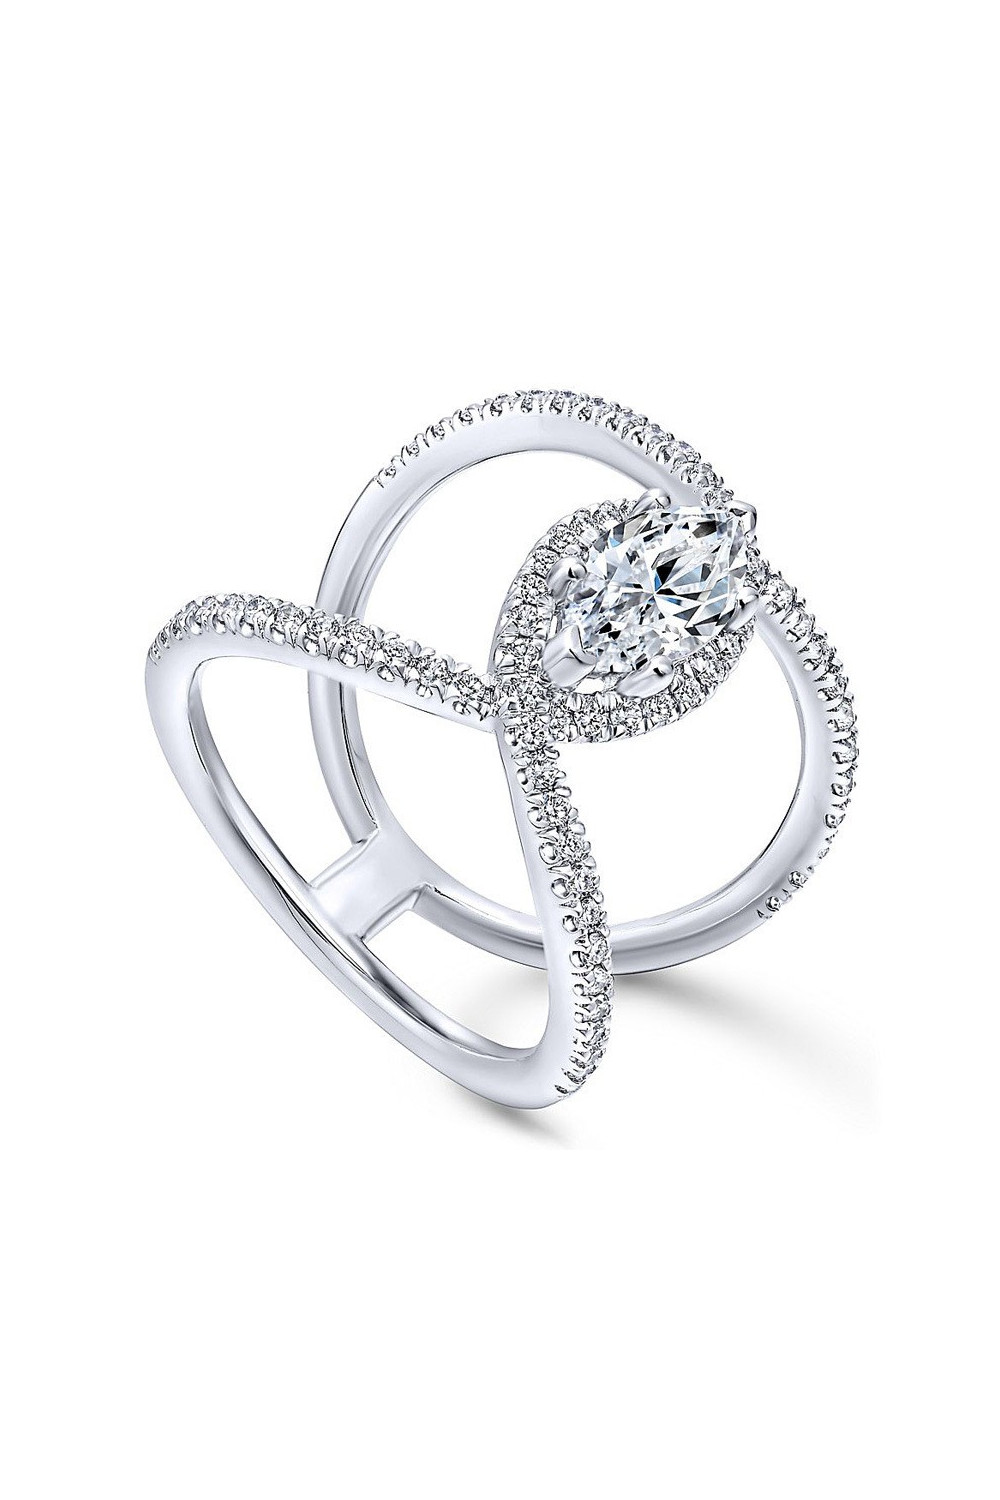 Luxury silver oval cross ring - Online jewelry store